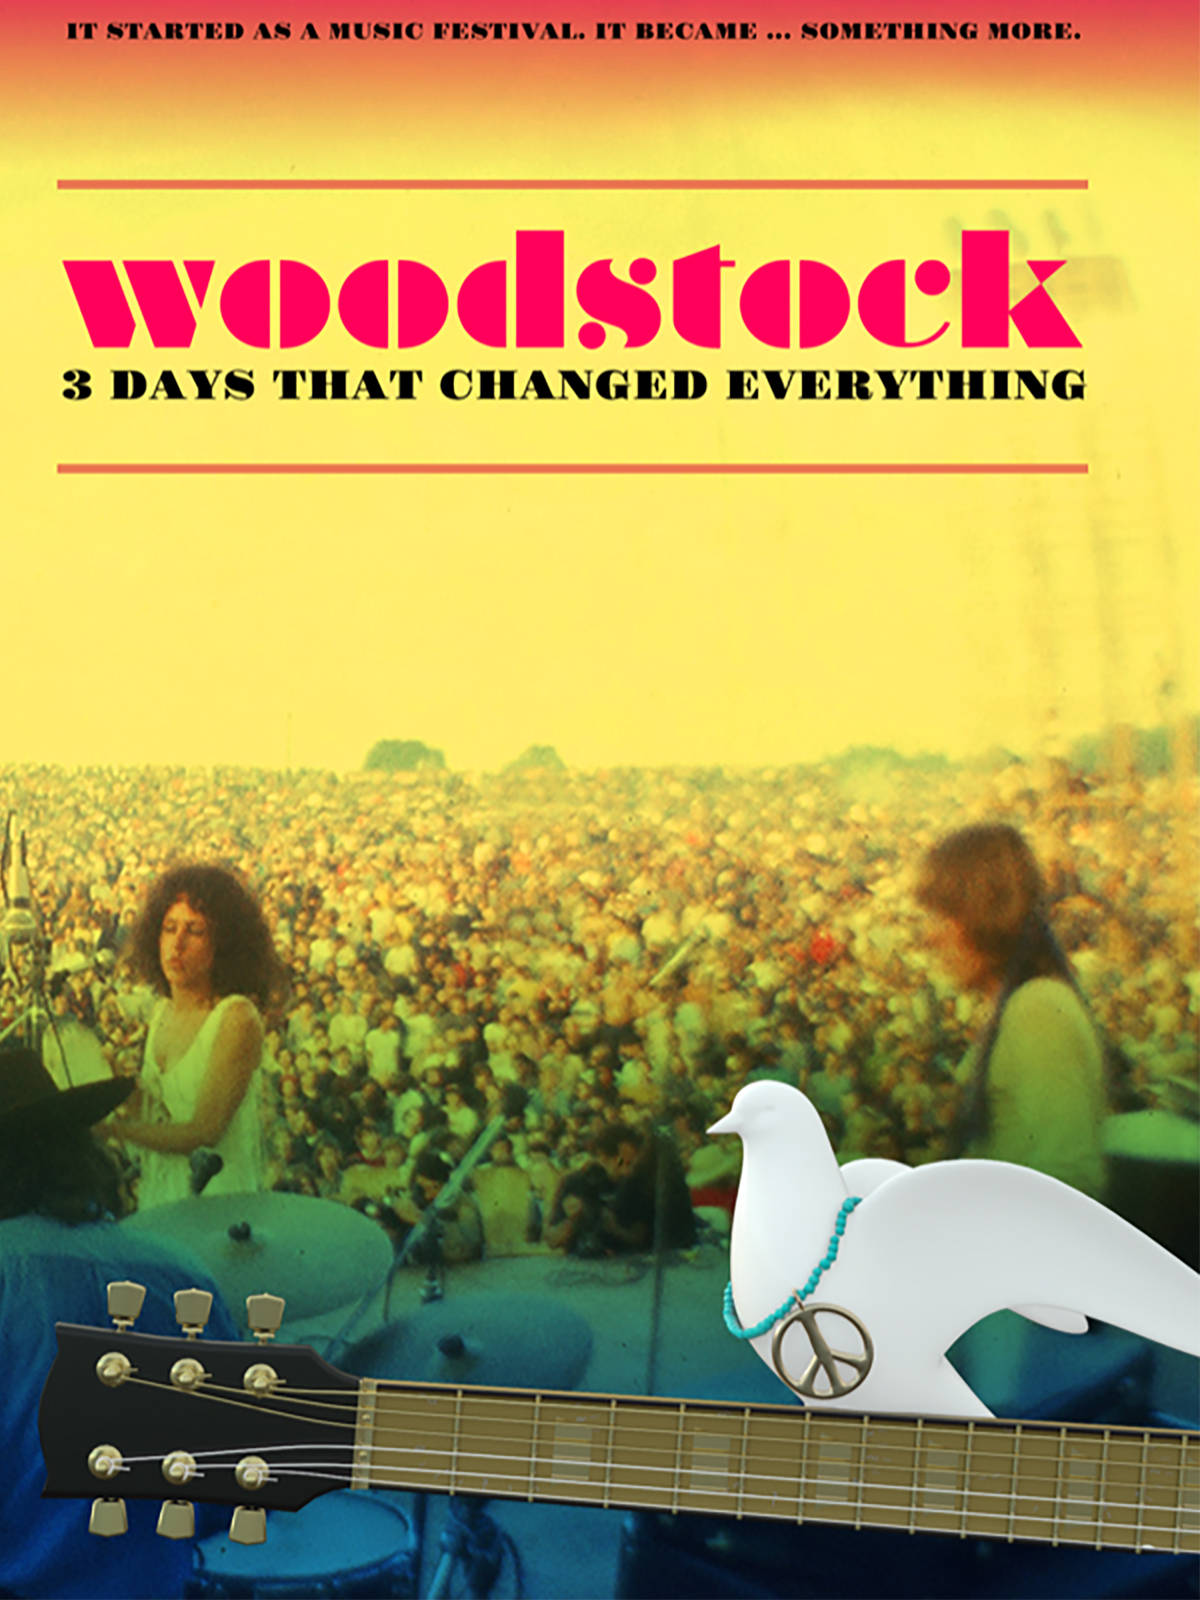 Top 999+ Woodstock Wallpaper Full HD, 4K Free to Use